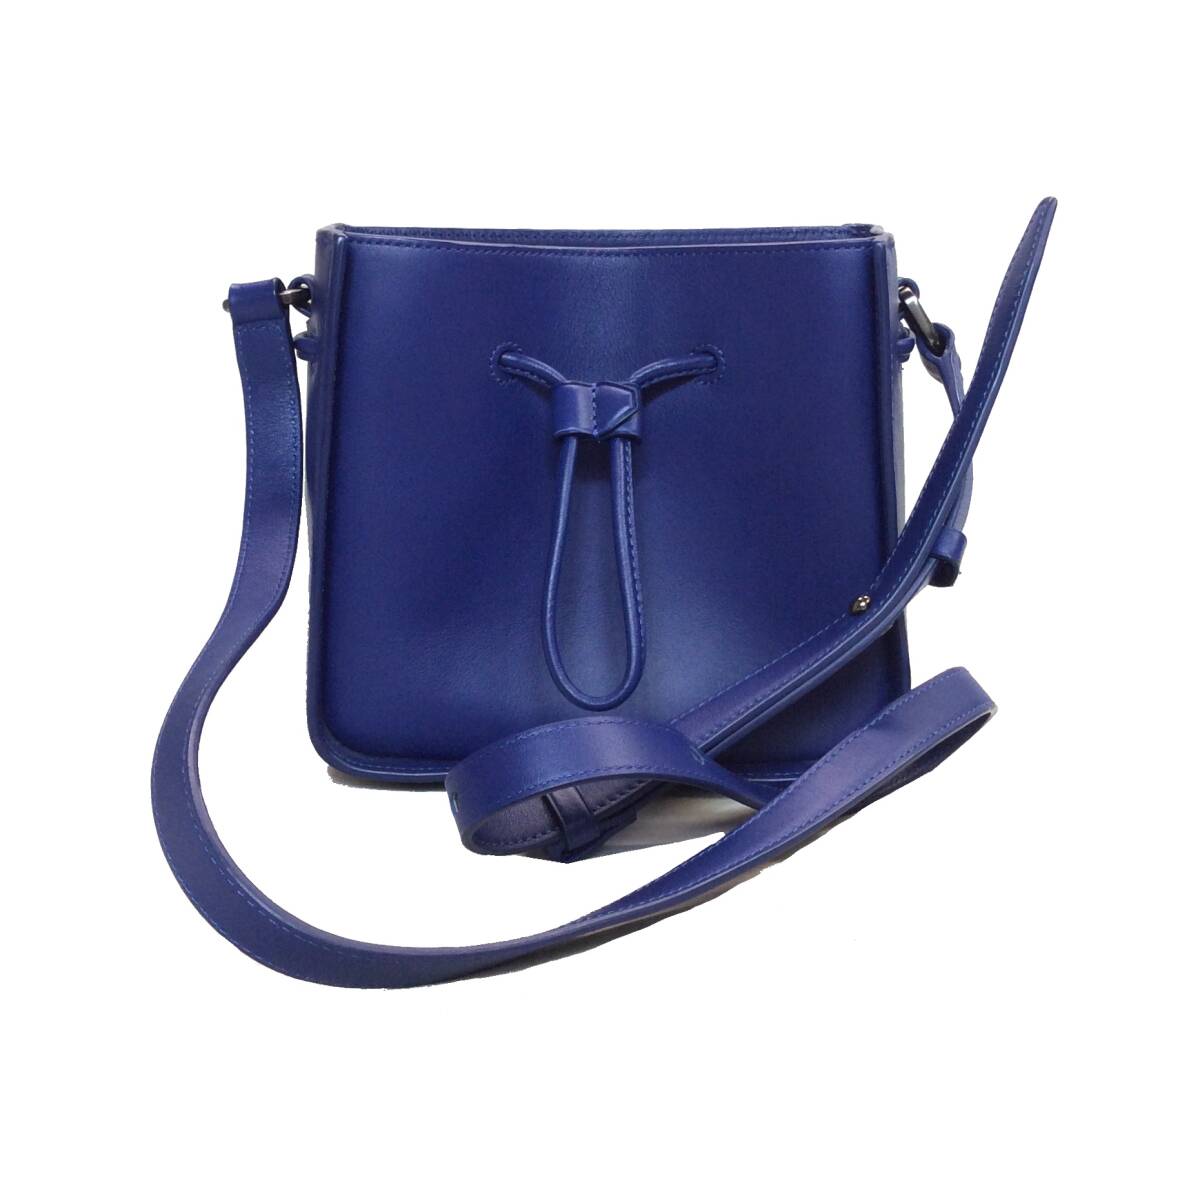 3.1Phillip Lims Lee one Philip rim shoulder bag bag leather sk air blue blue (ma)